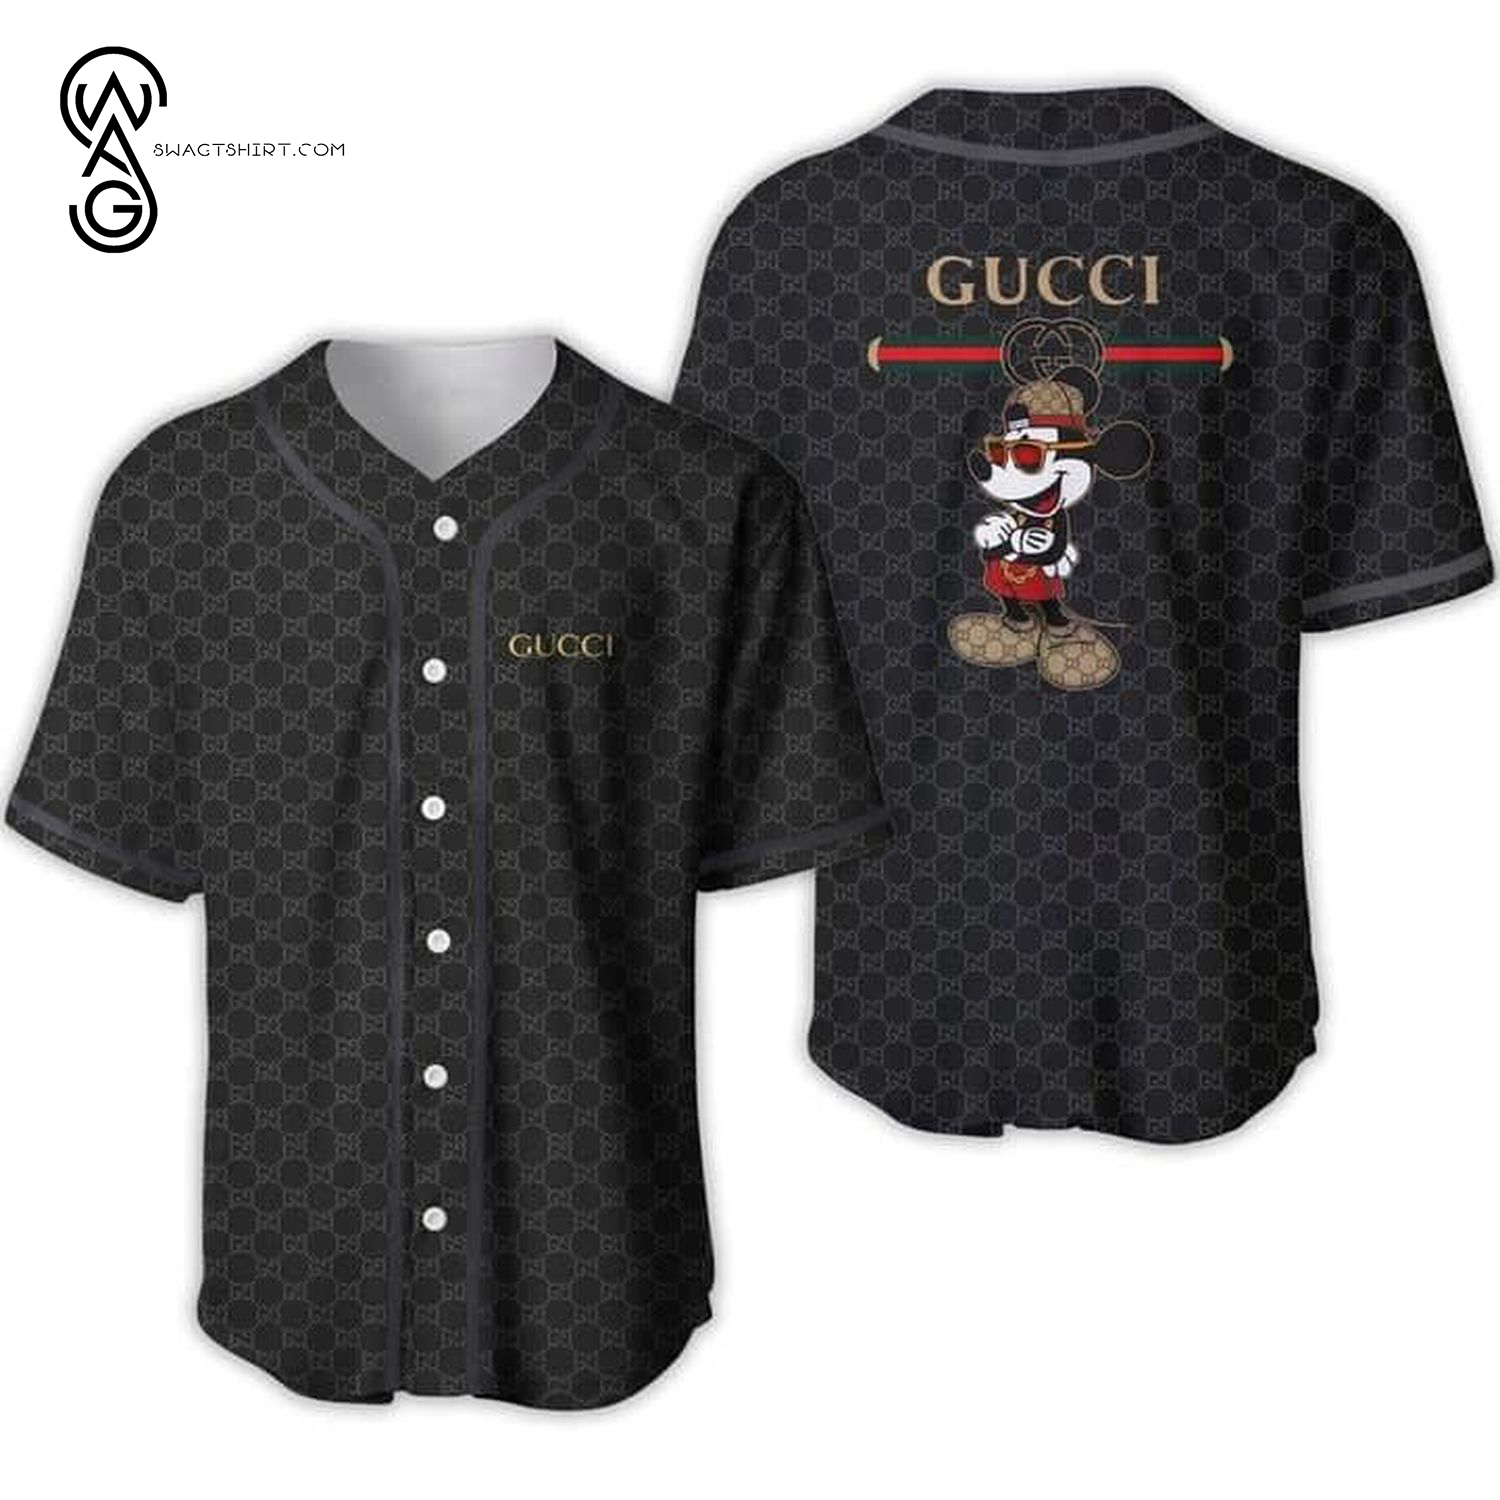 Gucci And Mickey Mouse Symbols Full Printed Baseball Jersey